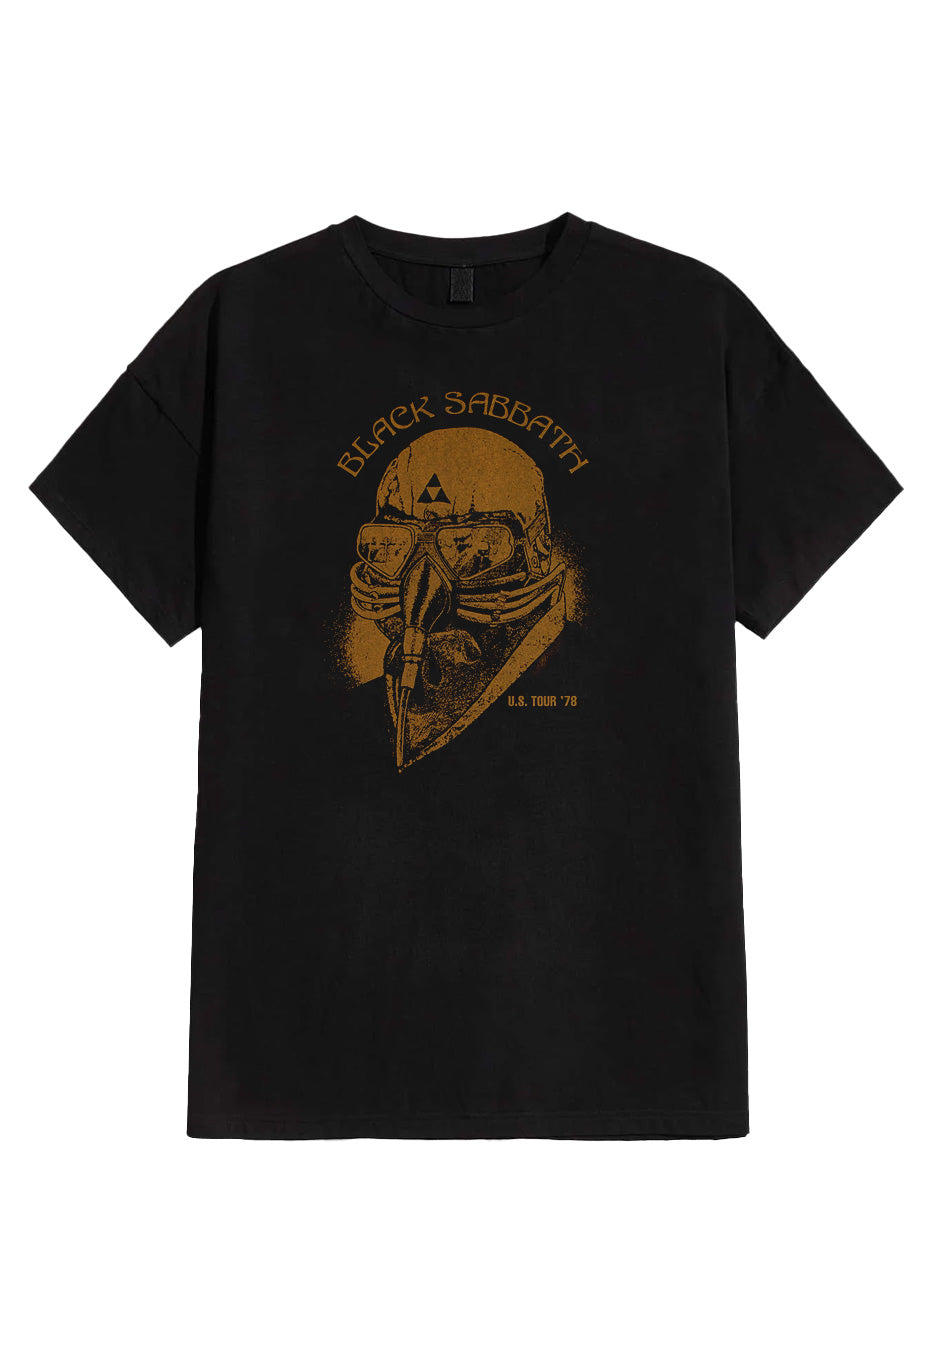 Black Sabbath - US Tour 78 - T-Shirt